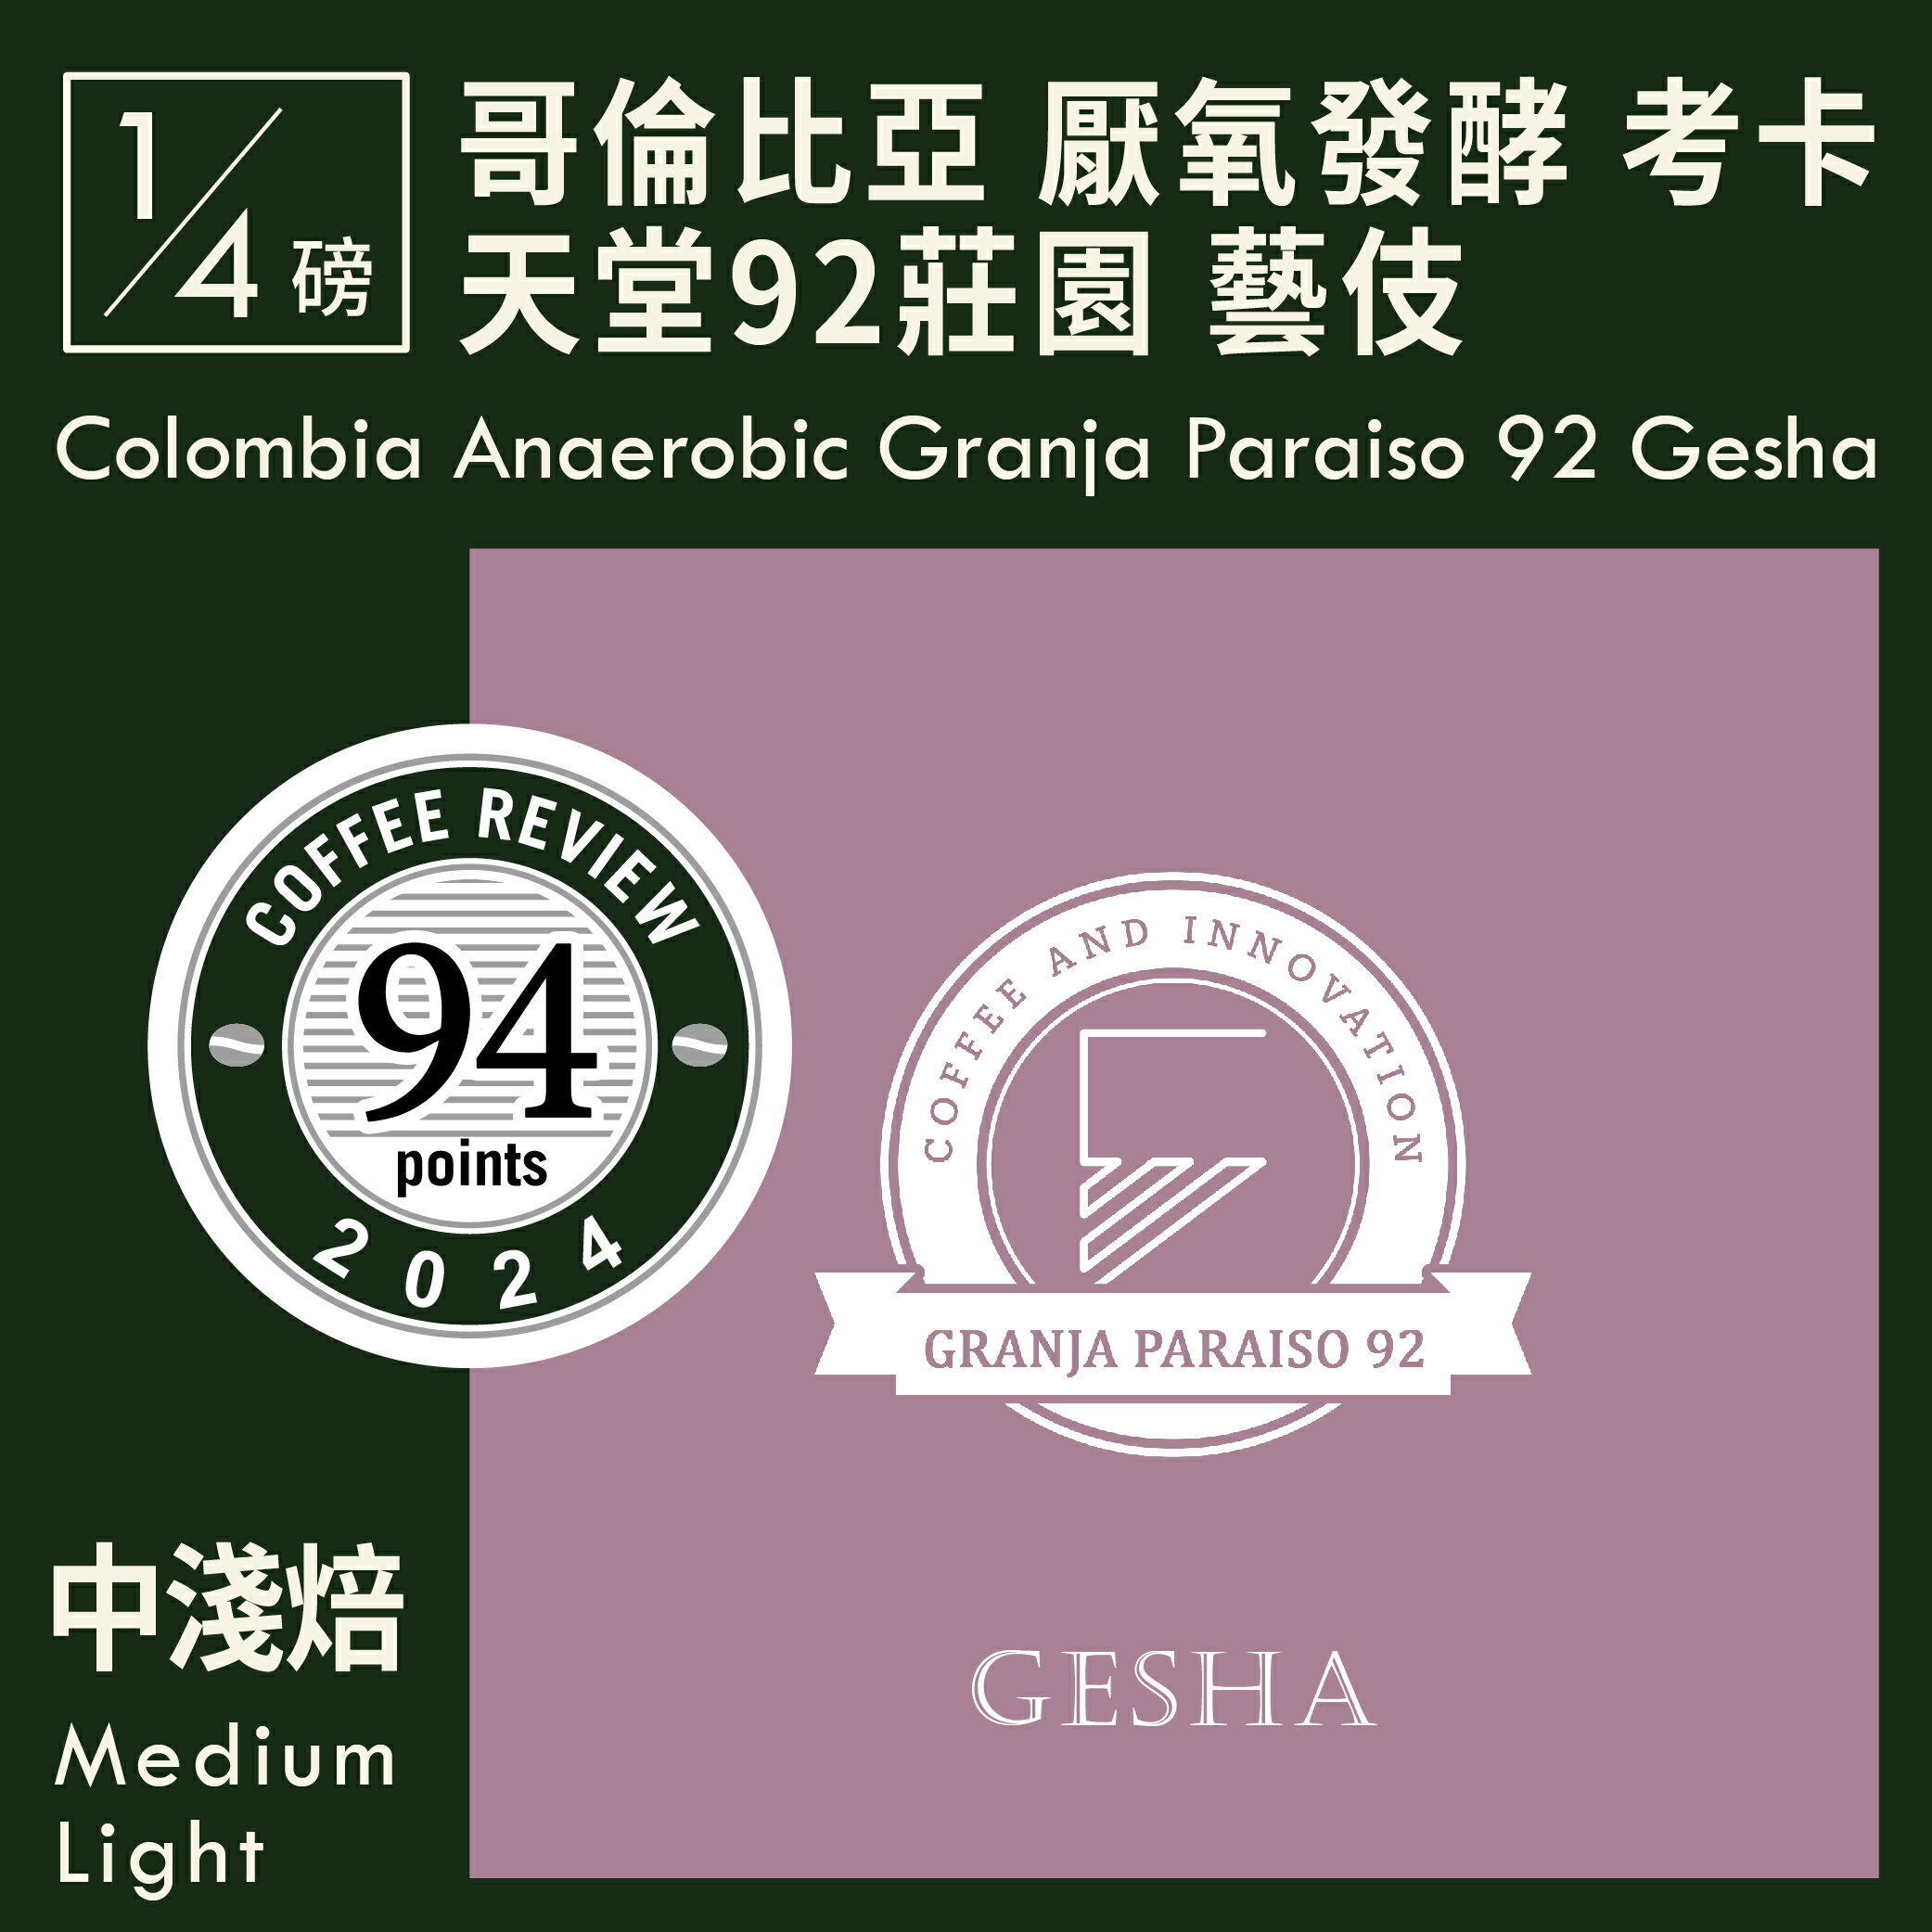 KaKaLove 咖啡-CR94 哥倫比亞 厭氧發酵處理 考卡 天堂 92 莊園 瑰夏/藝伎  0.25磅